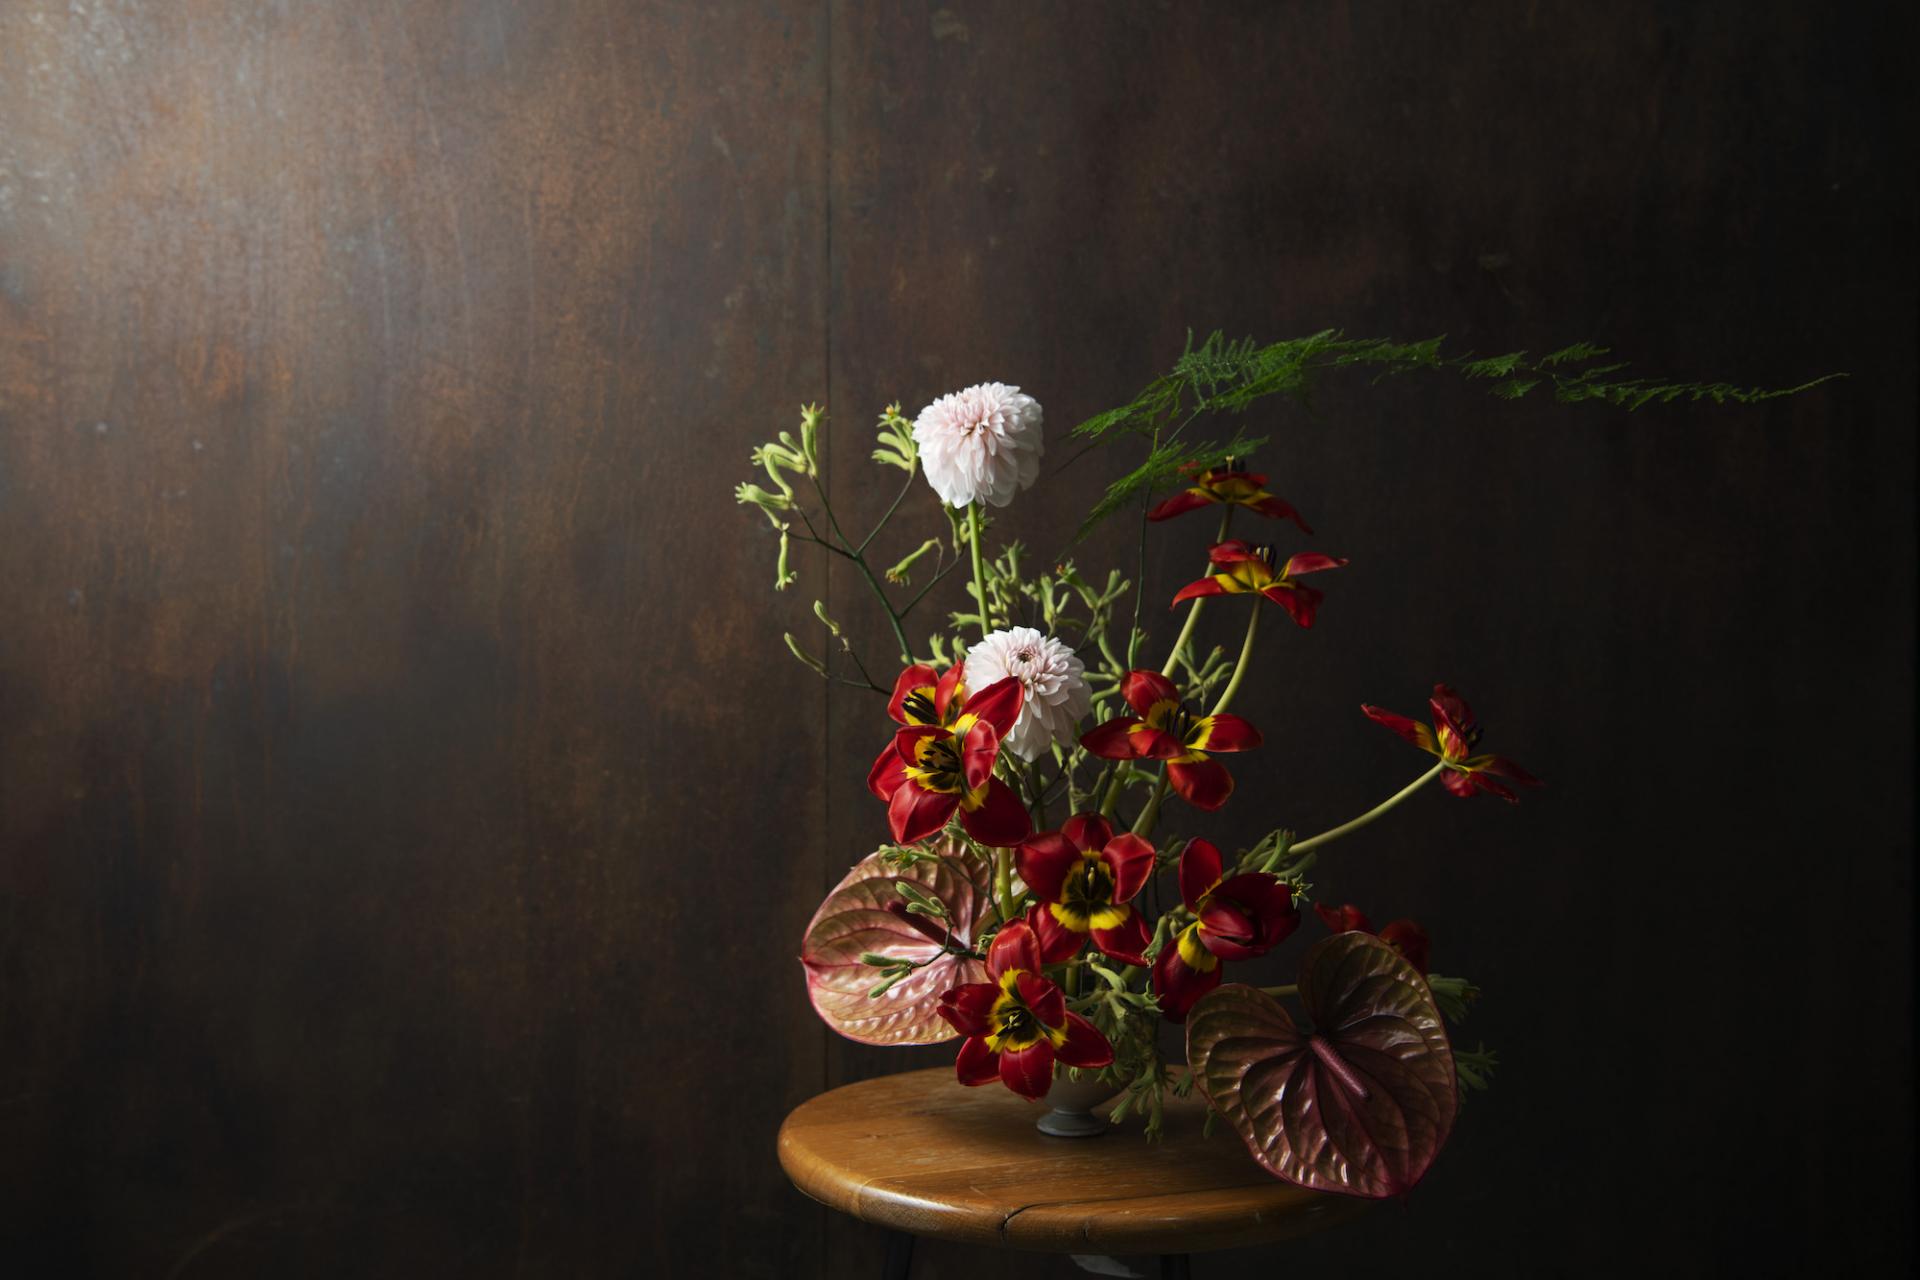 Flower Power: Local Florist Mode Mok on the Art of Ikebana